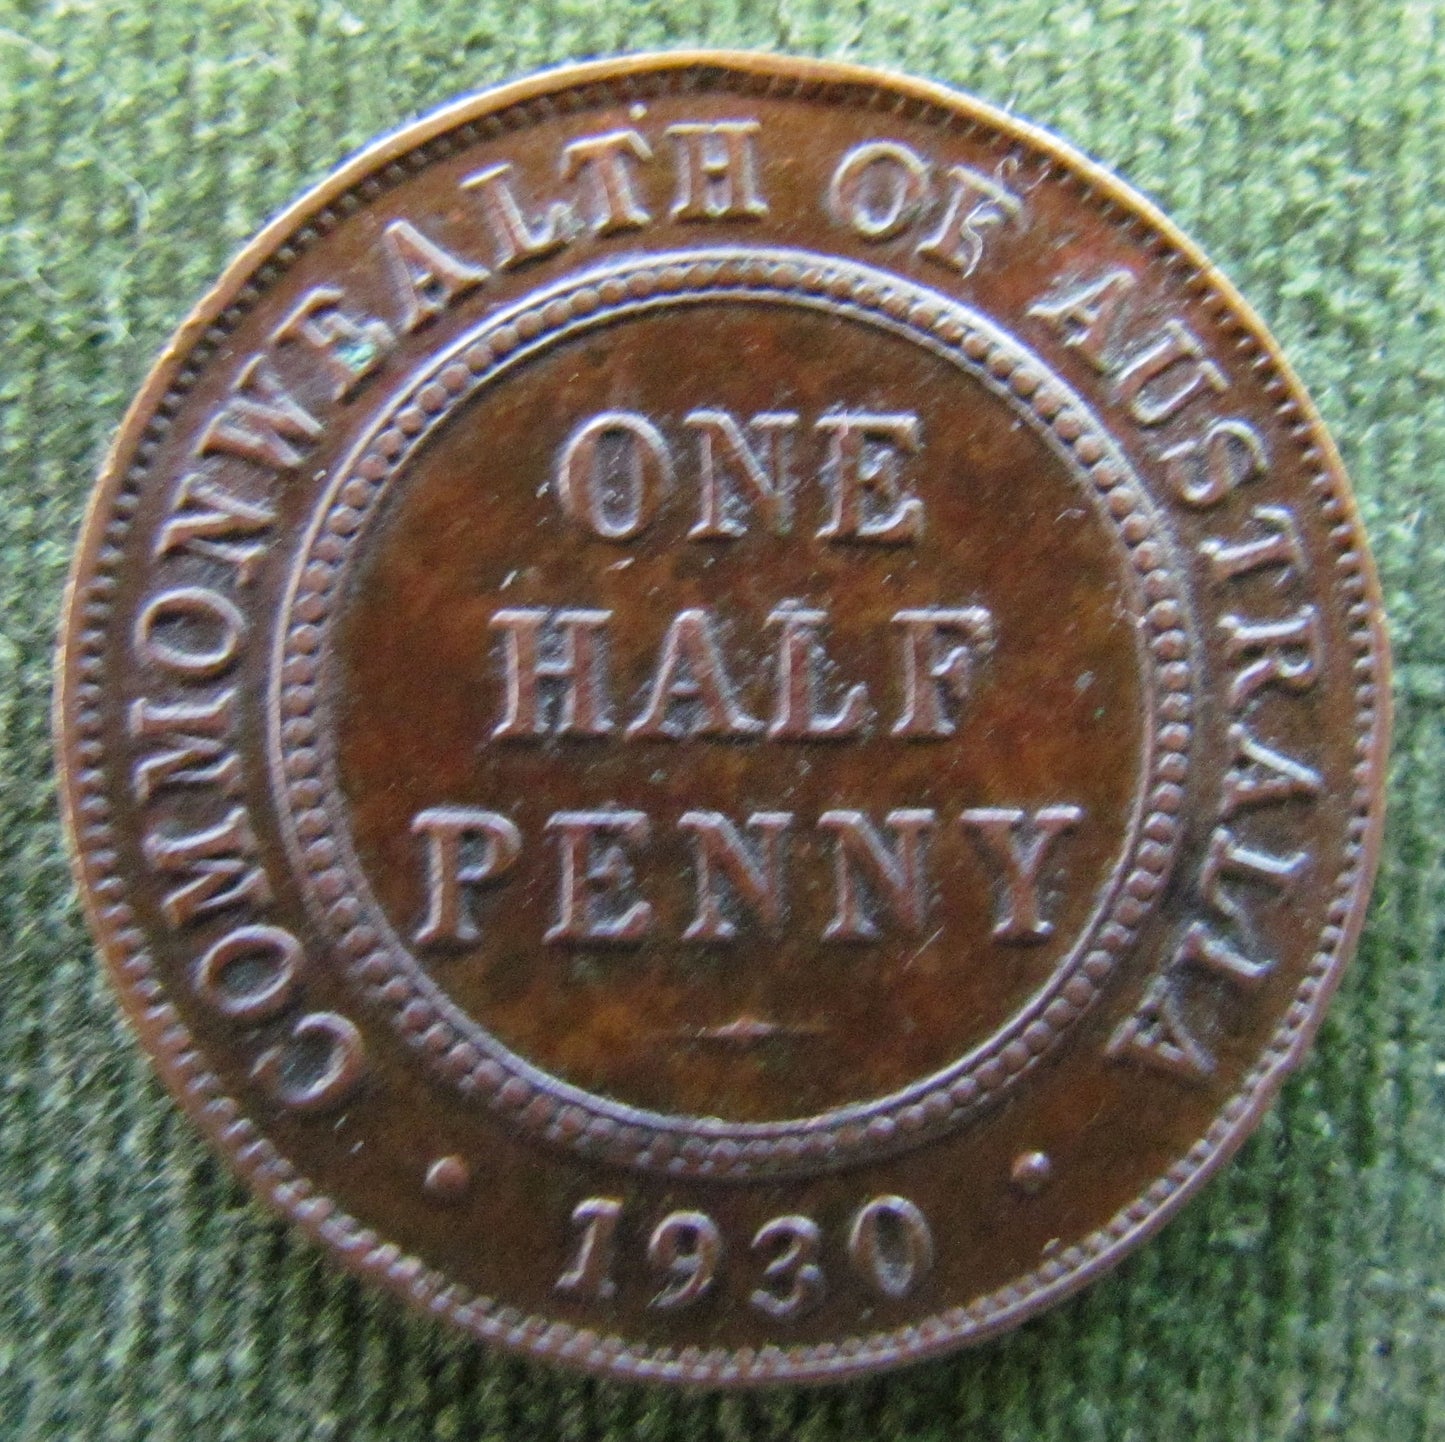 Australian 1930 1/2d Half Penny King George V Coin